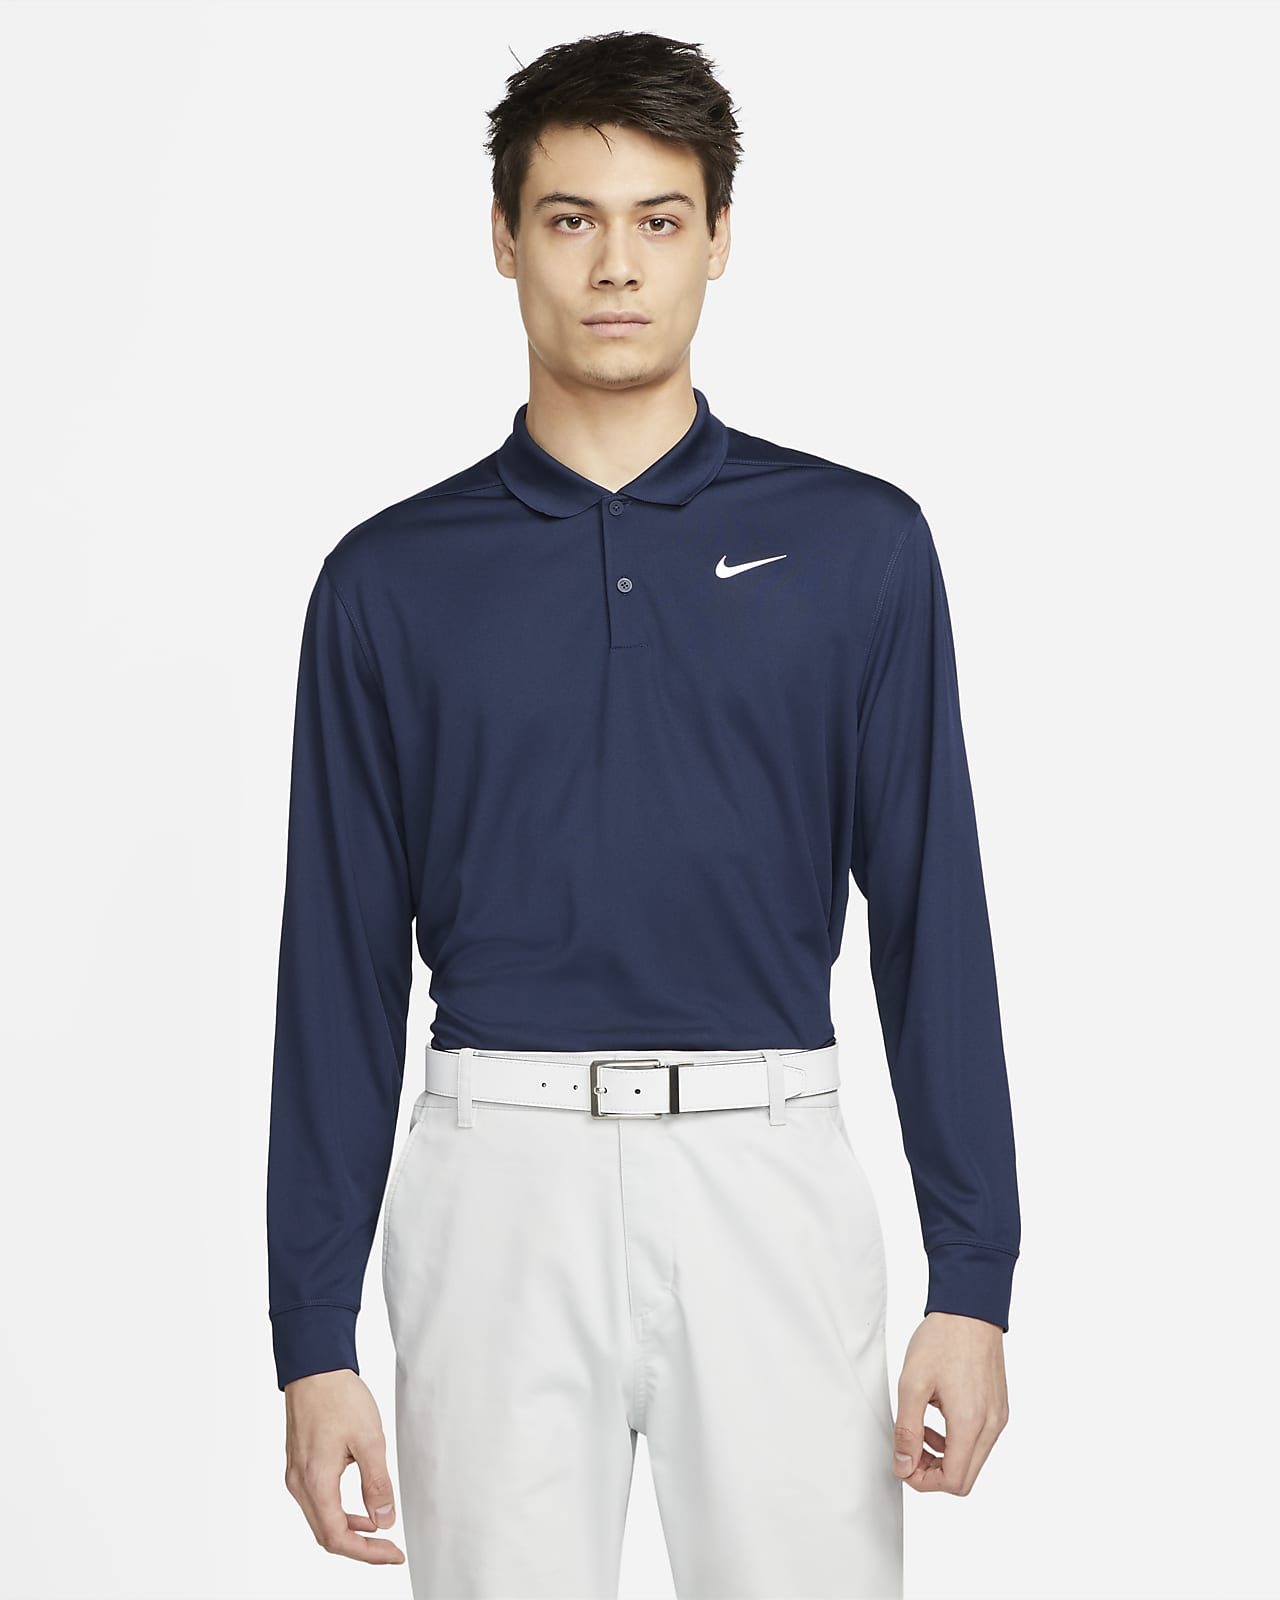 Nike DRI-Fit Victory Golf Pants - Mens